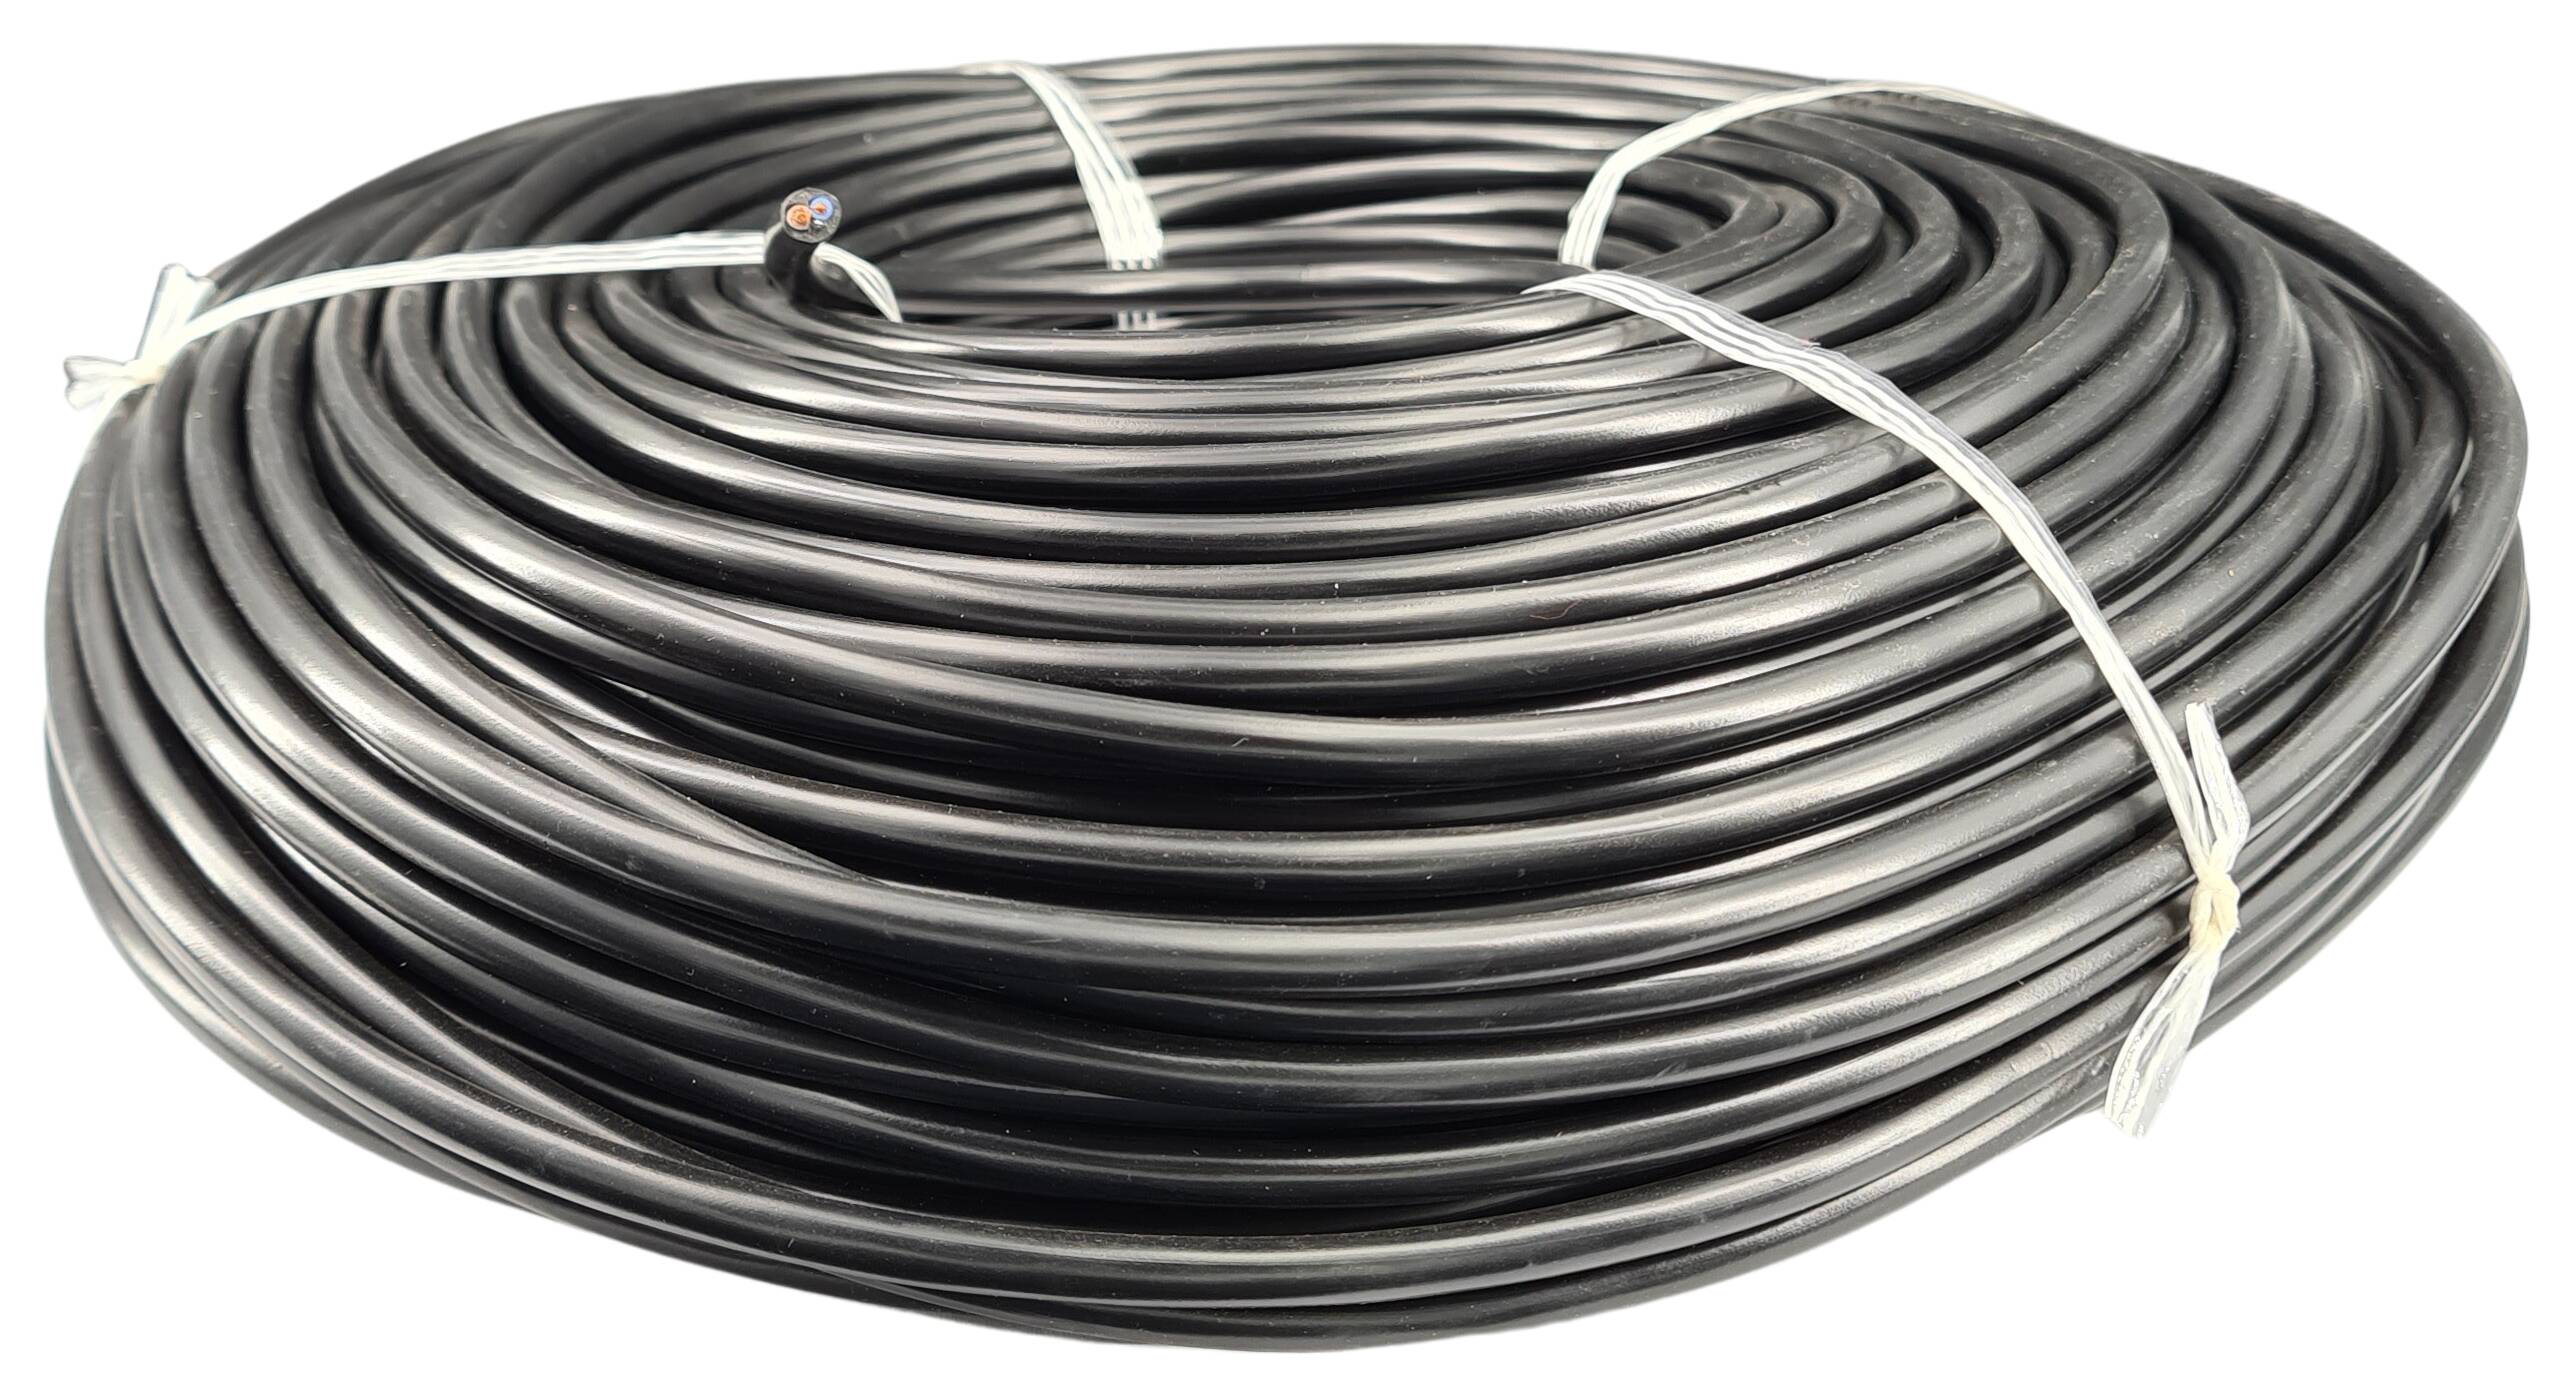 Kabel m. Stahlseil 2x0,75 HO3VV-F rund AD = 5,8 mm PVC ummantelt schwarz